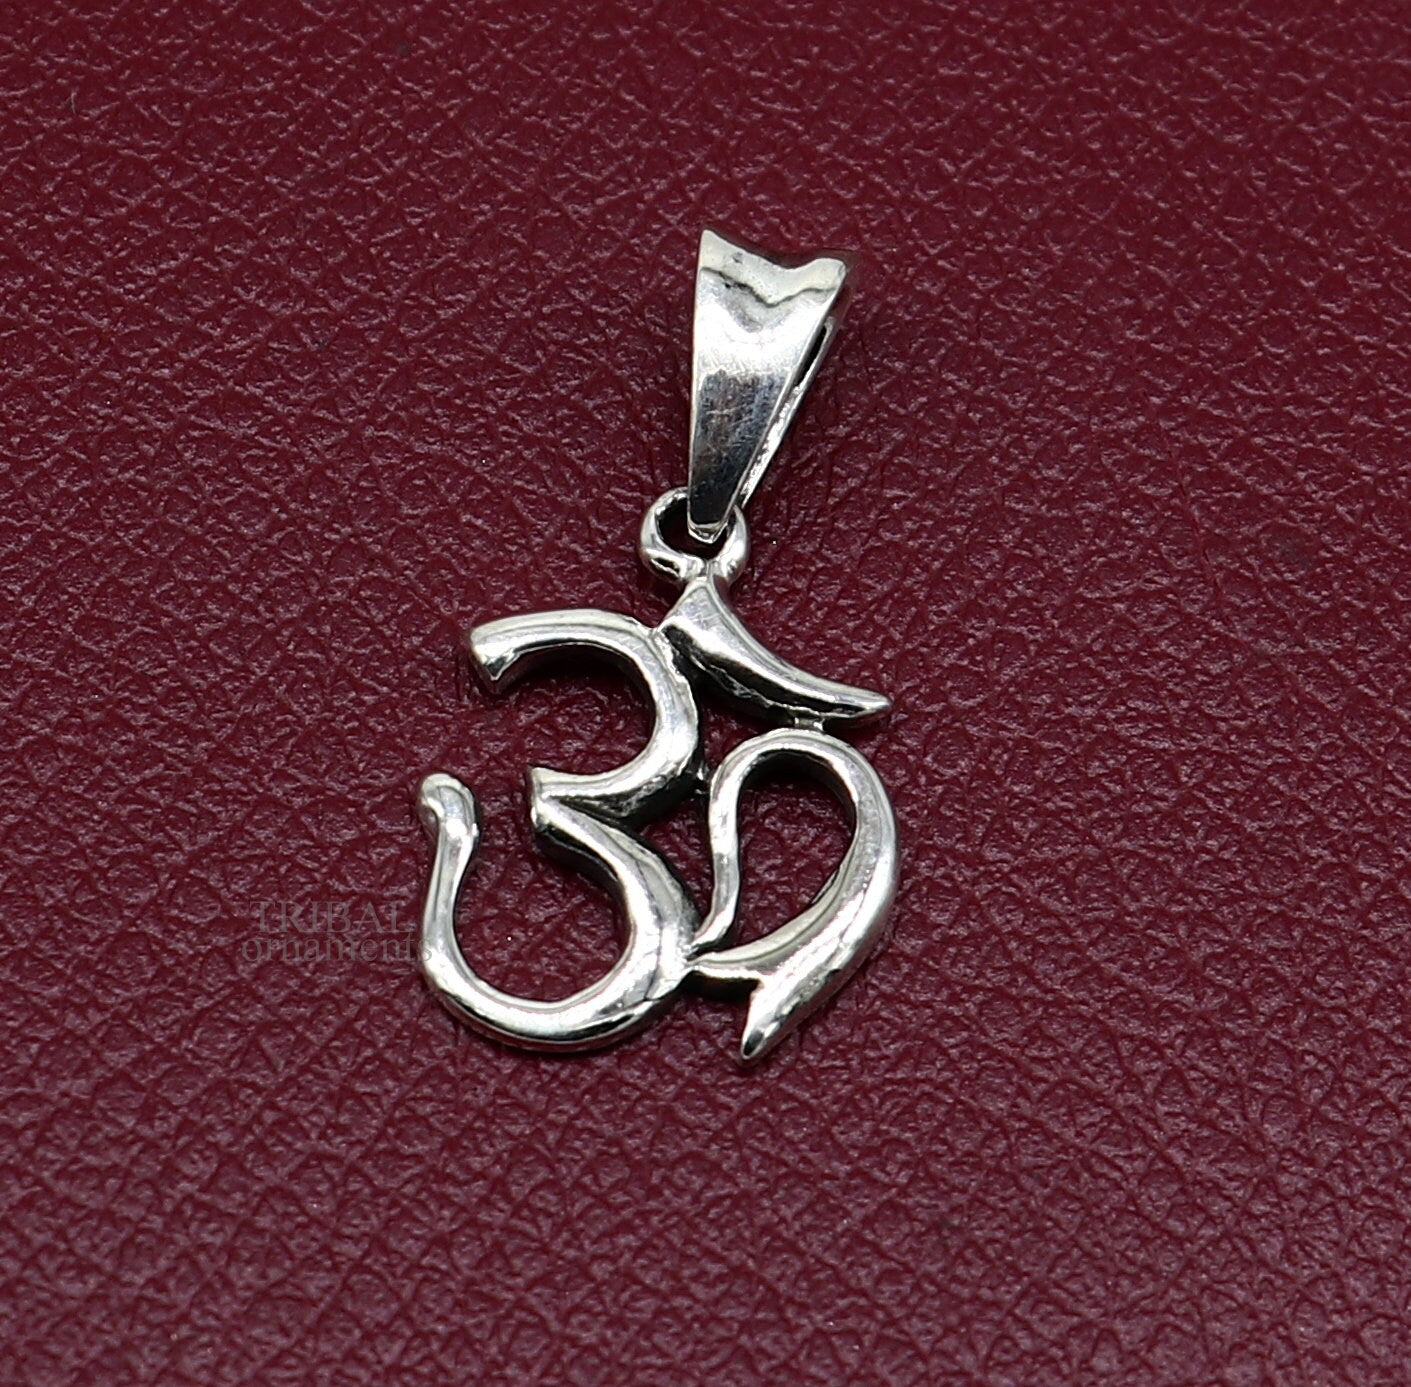 925 sterling silver handmade Hindu mantra 'Aum' OM pendant, amazing stylish unisex pendant personalized jewelry tribal jewelry ssp1585 - TRIBAL ORNAMENTS